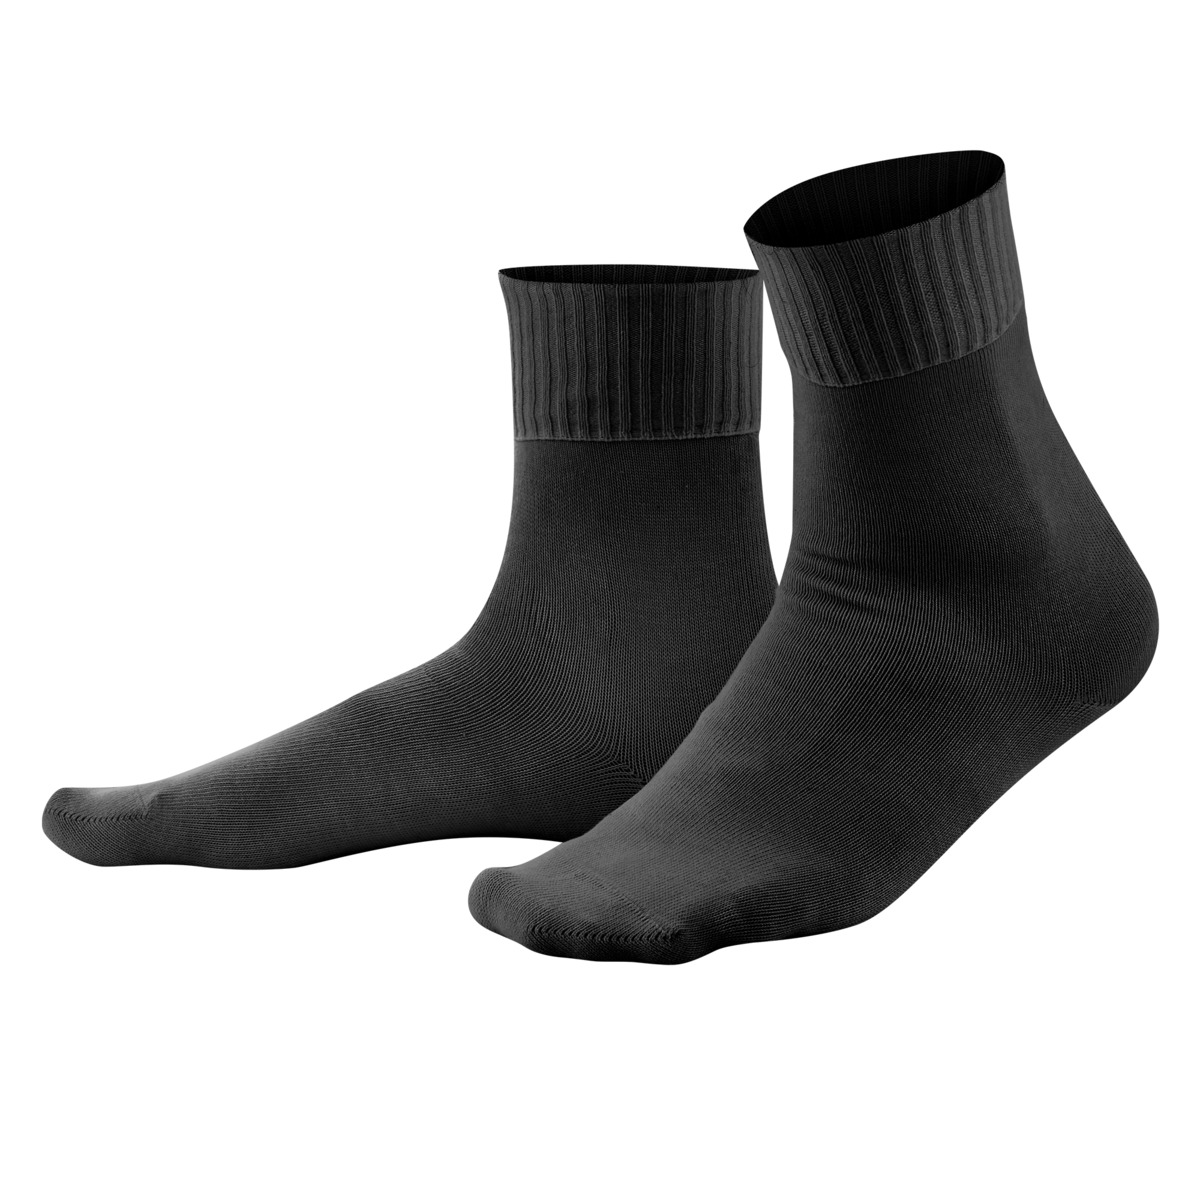 Black Comfort Socks, 